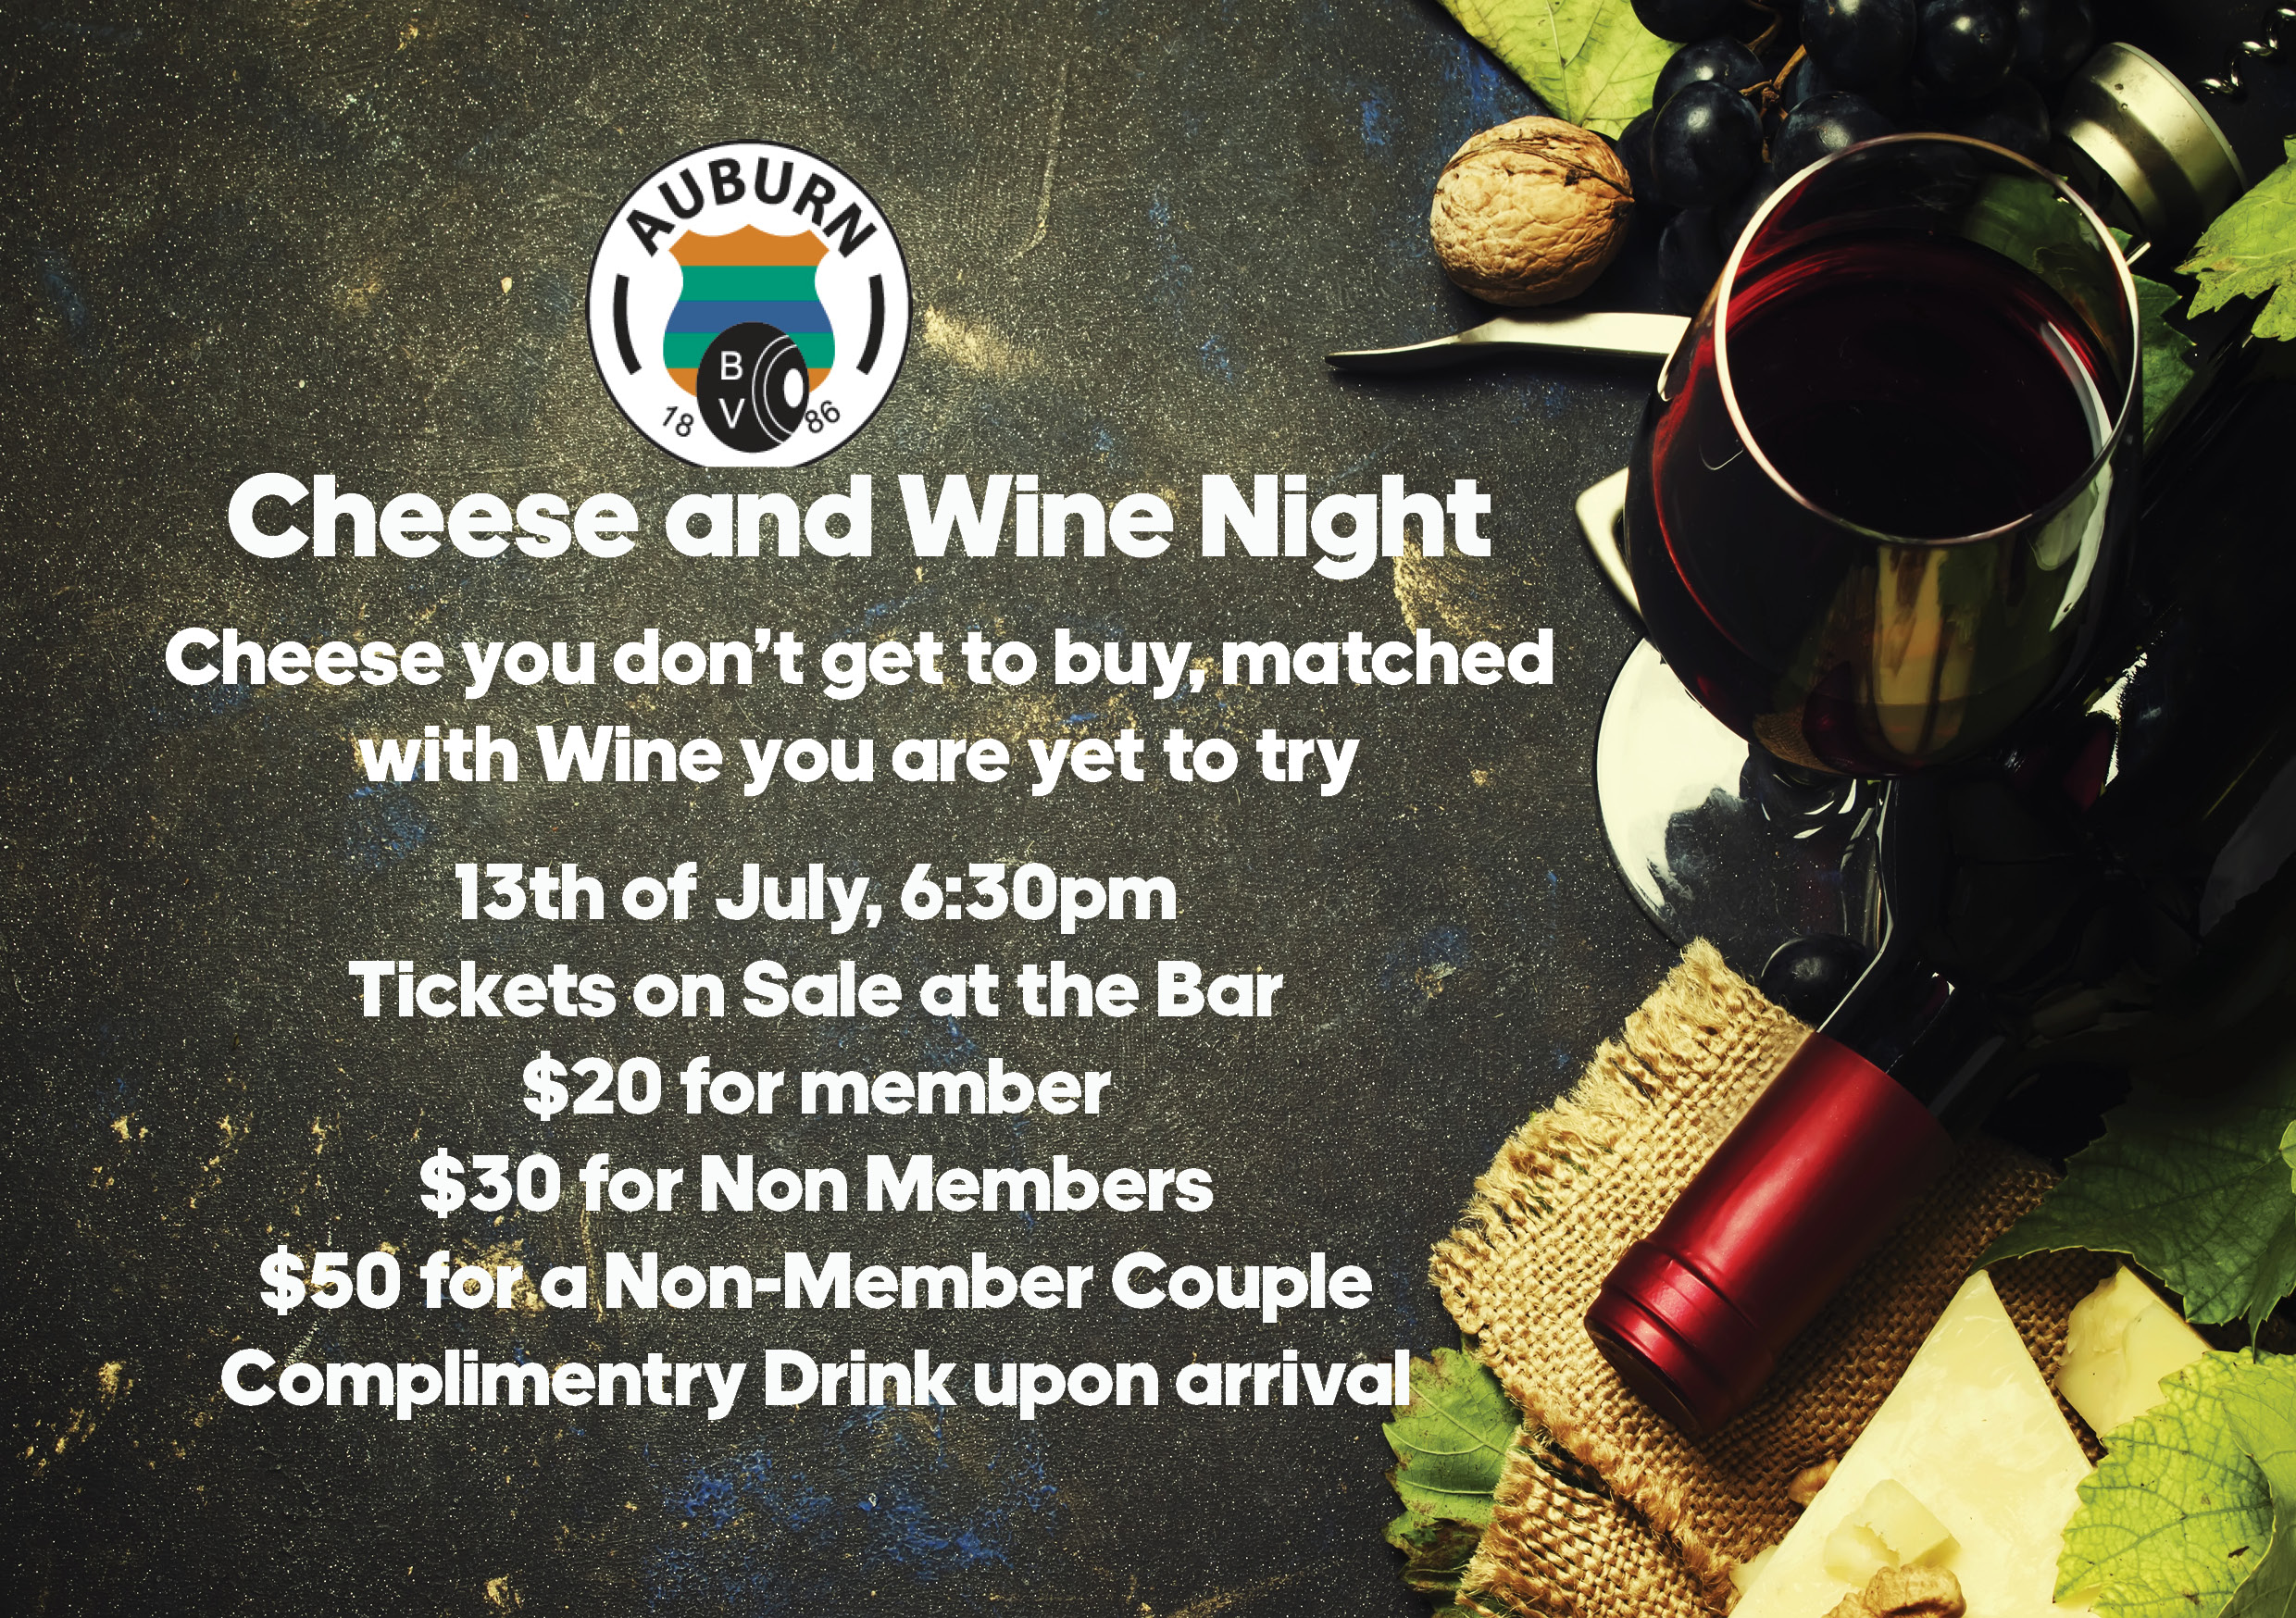 Auburn Bowls Club’s Wine and Cheese Night